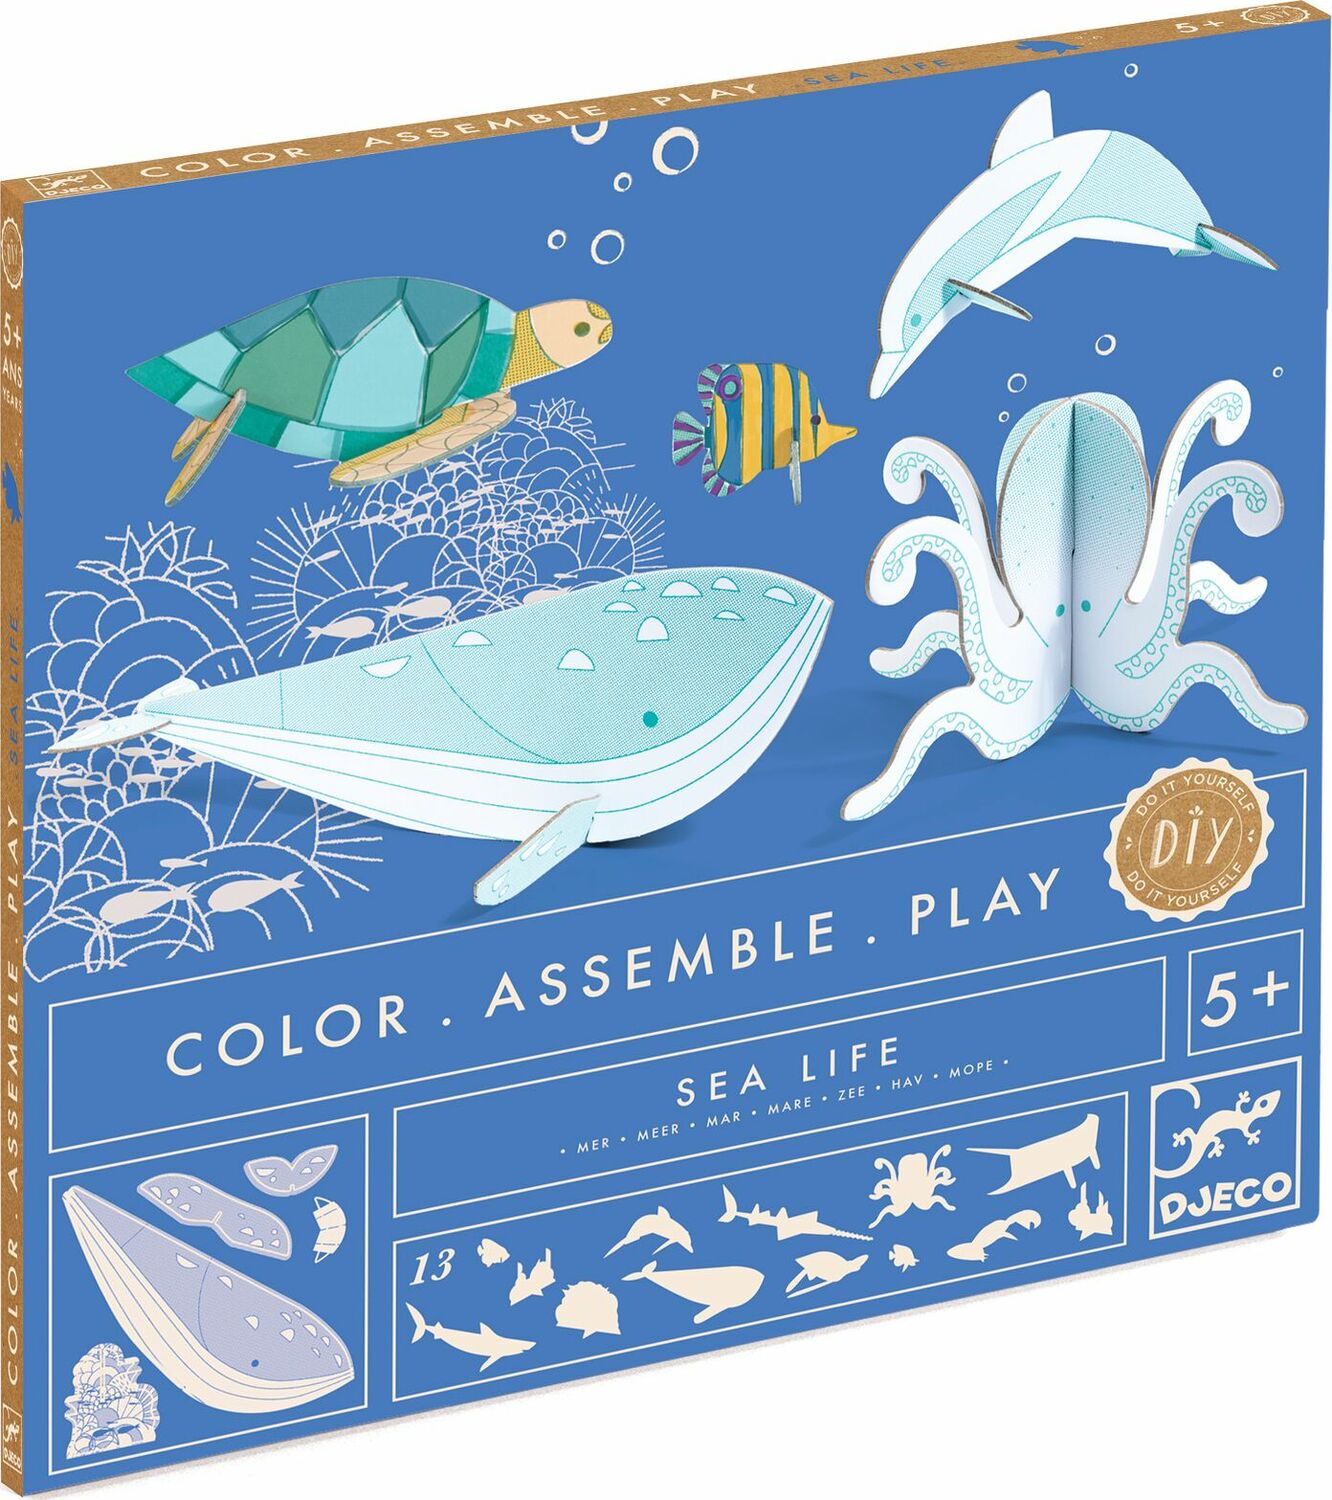 Sea Life -Color. Assemble. Play.